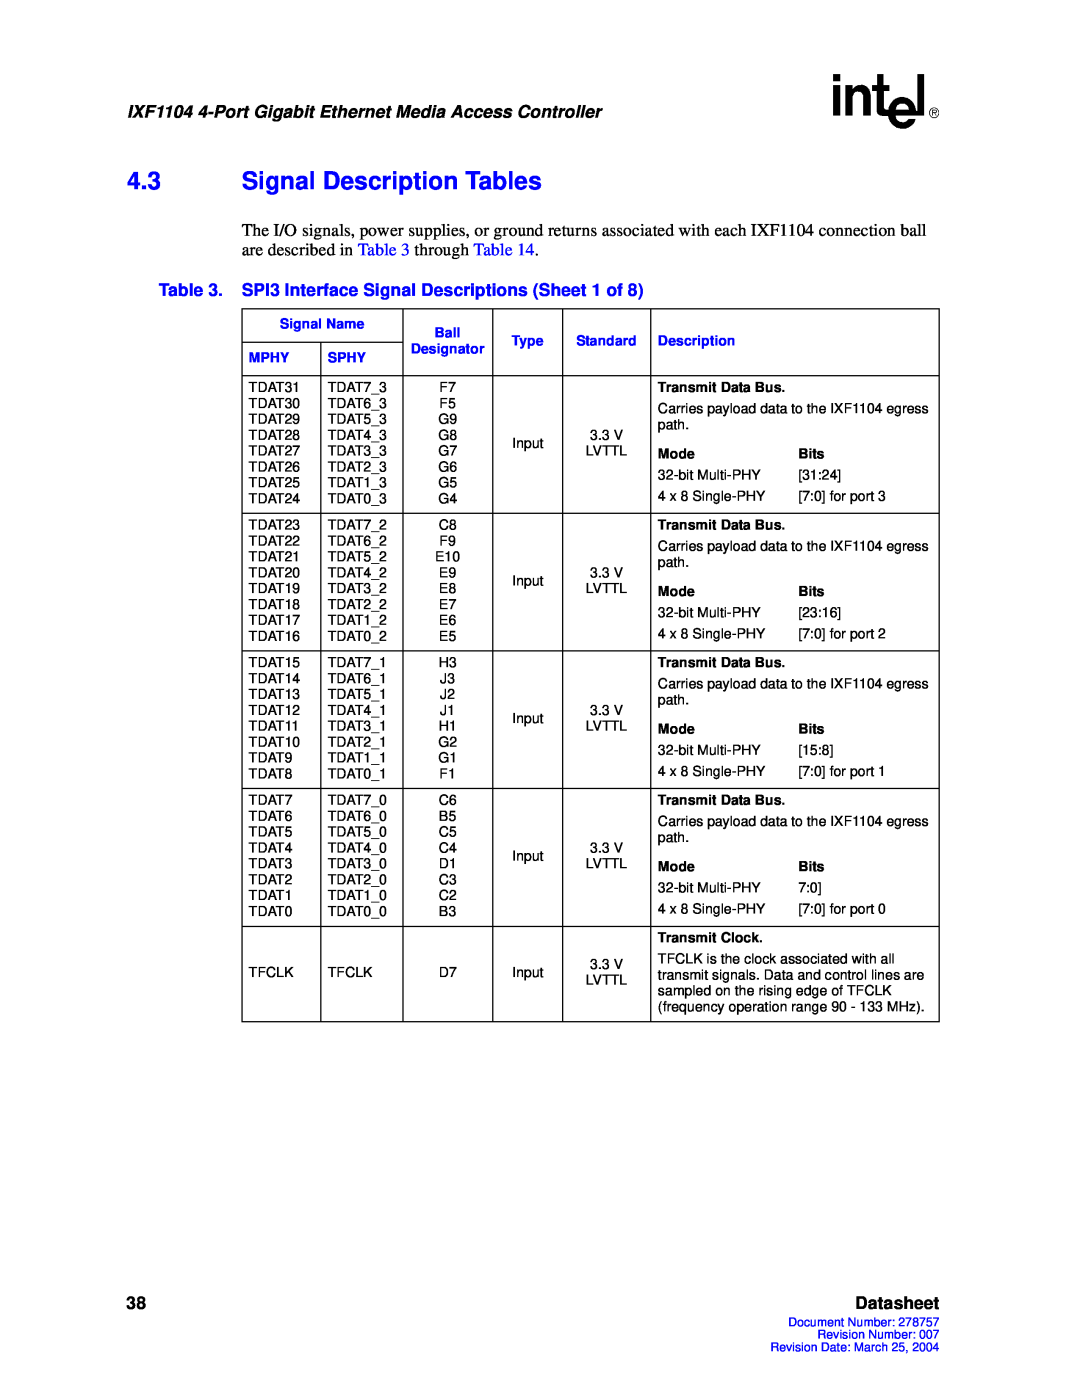 Intel IXF1104 manual 4.3Signal Description Tables, Datasheet, Mode, Bits, Transmit Clock 